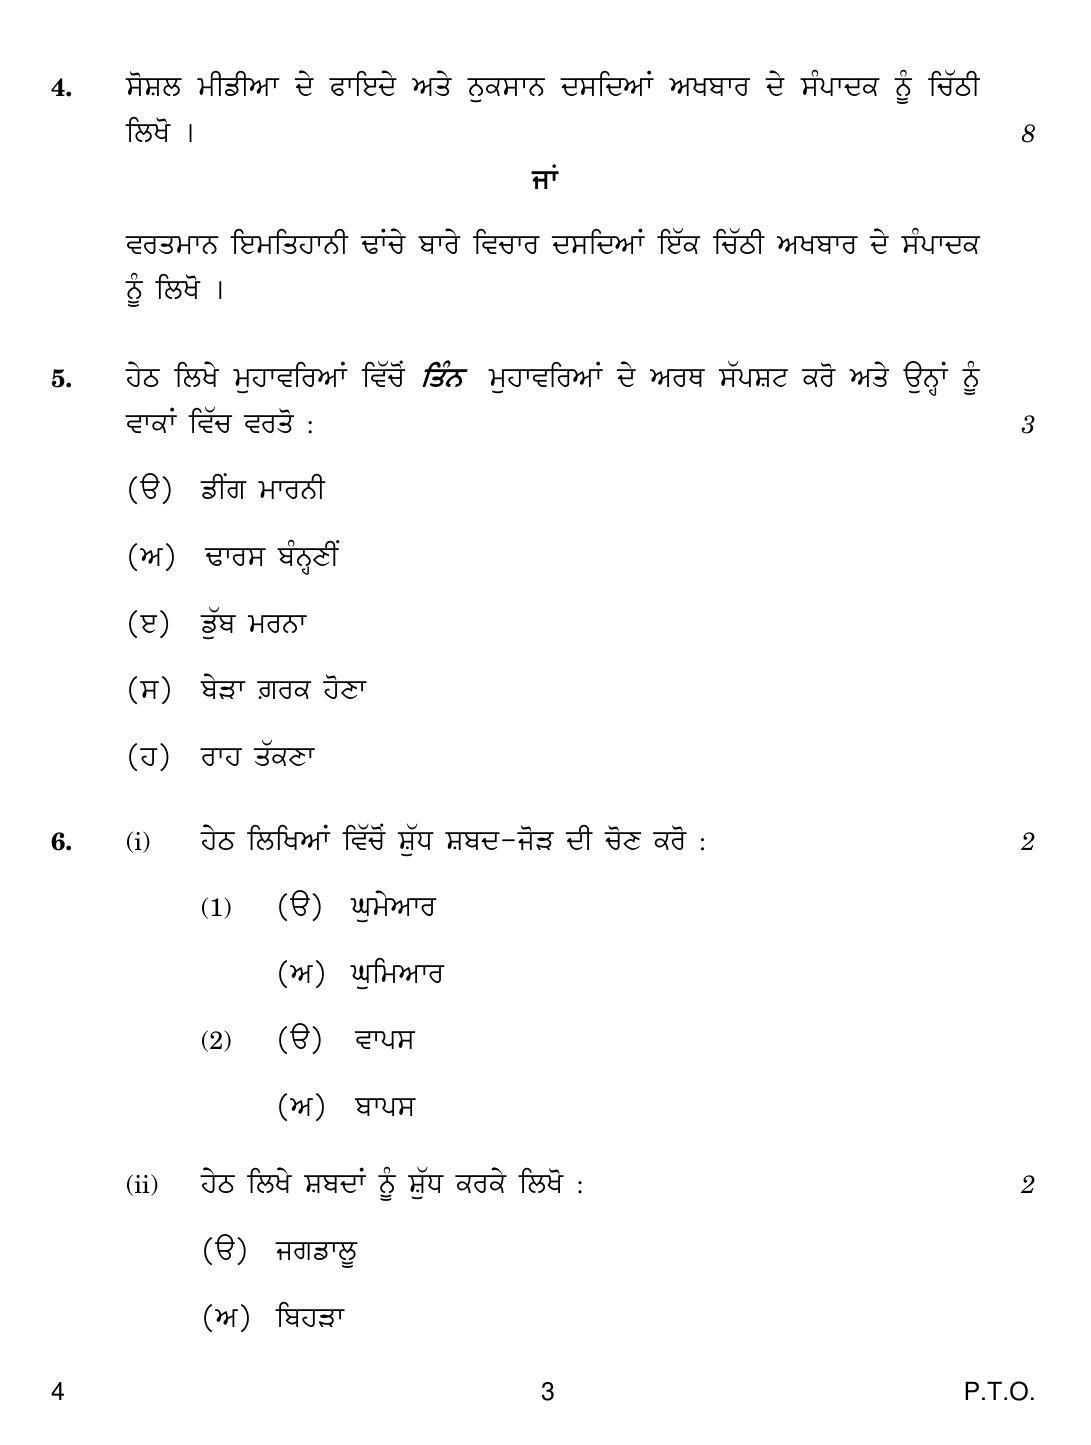 CBSE Class 12 4 Punjabi 2019 Compartment Question Paper - Page 3